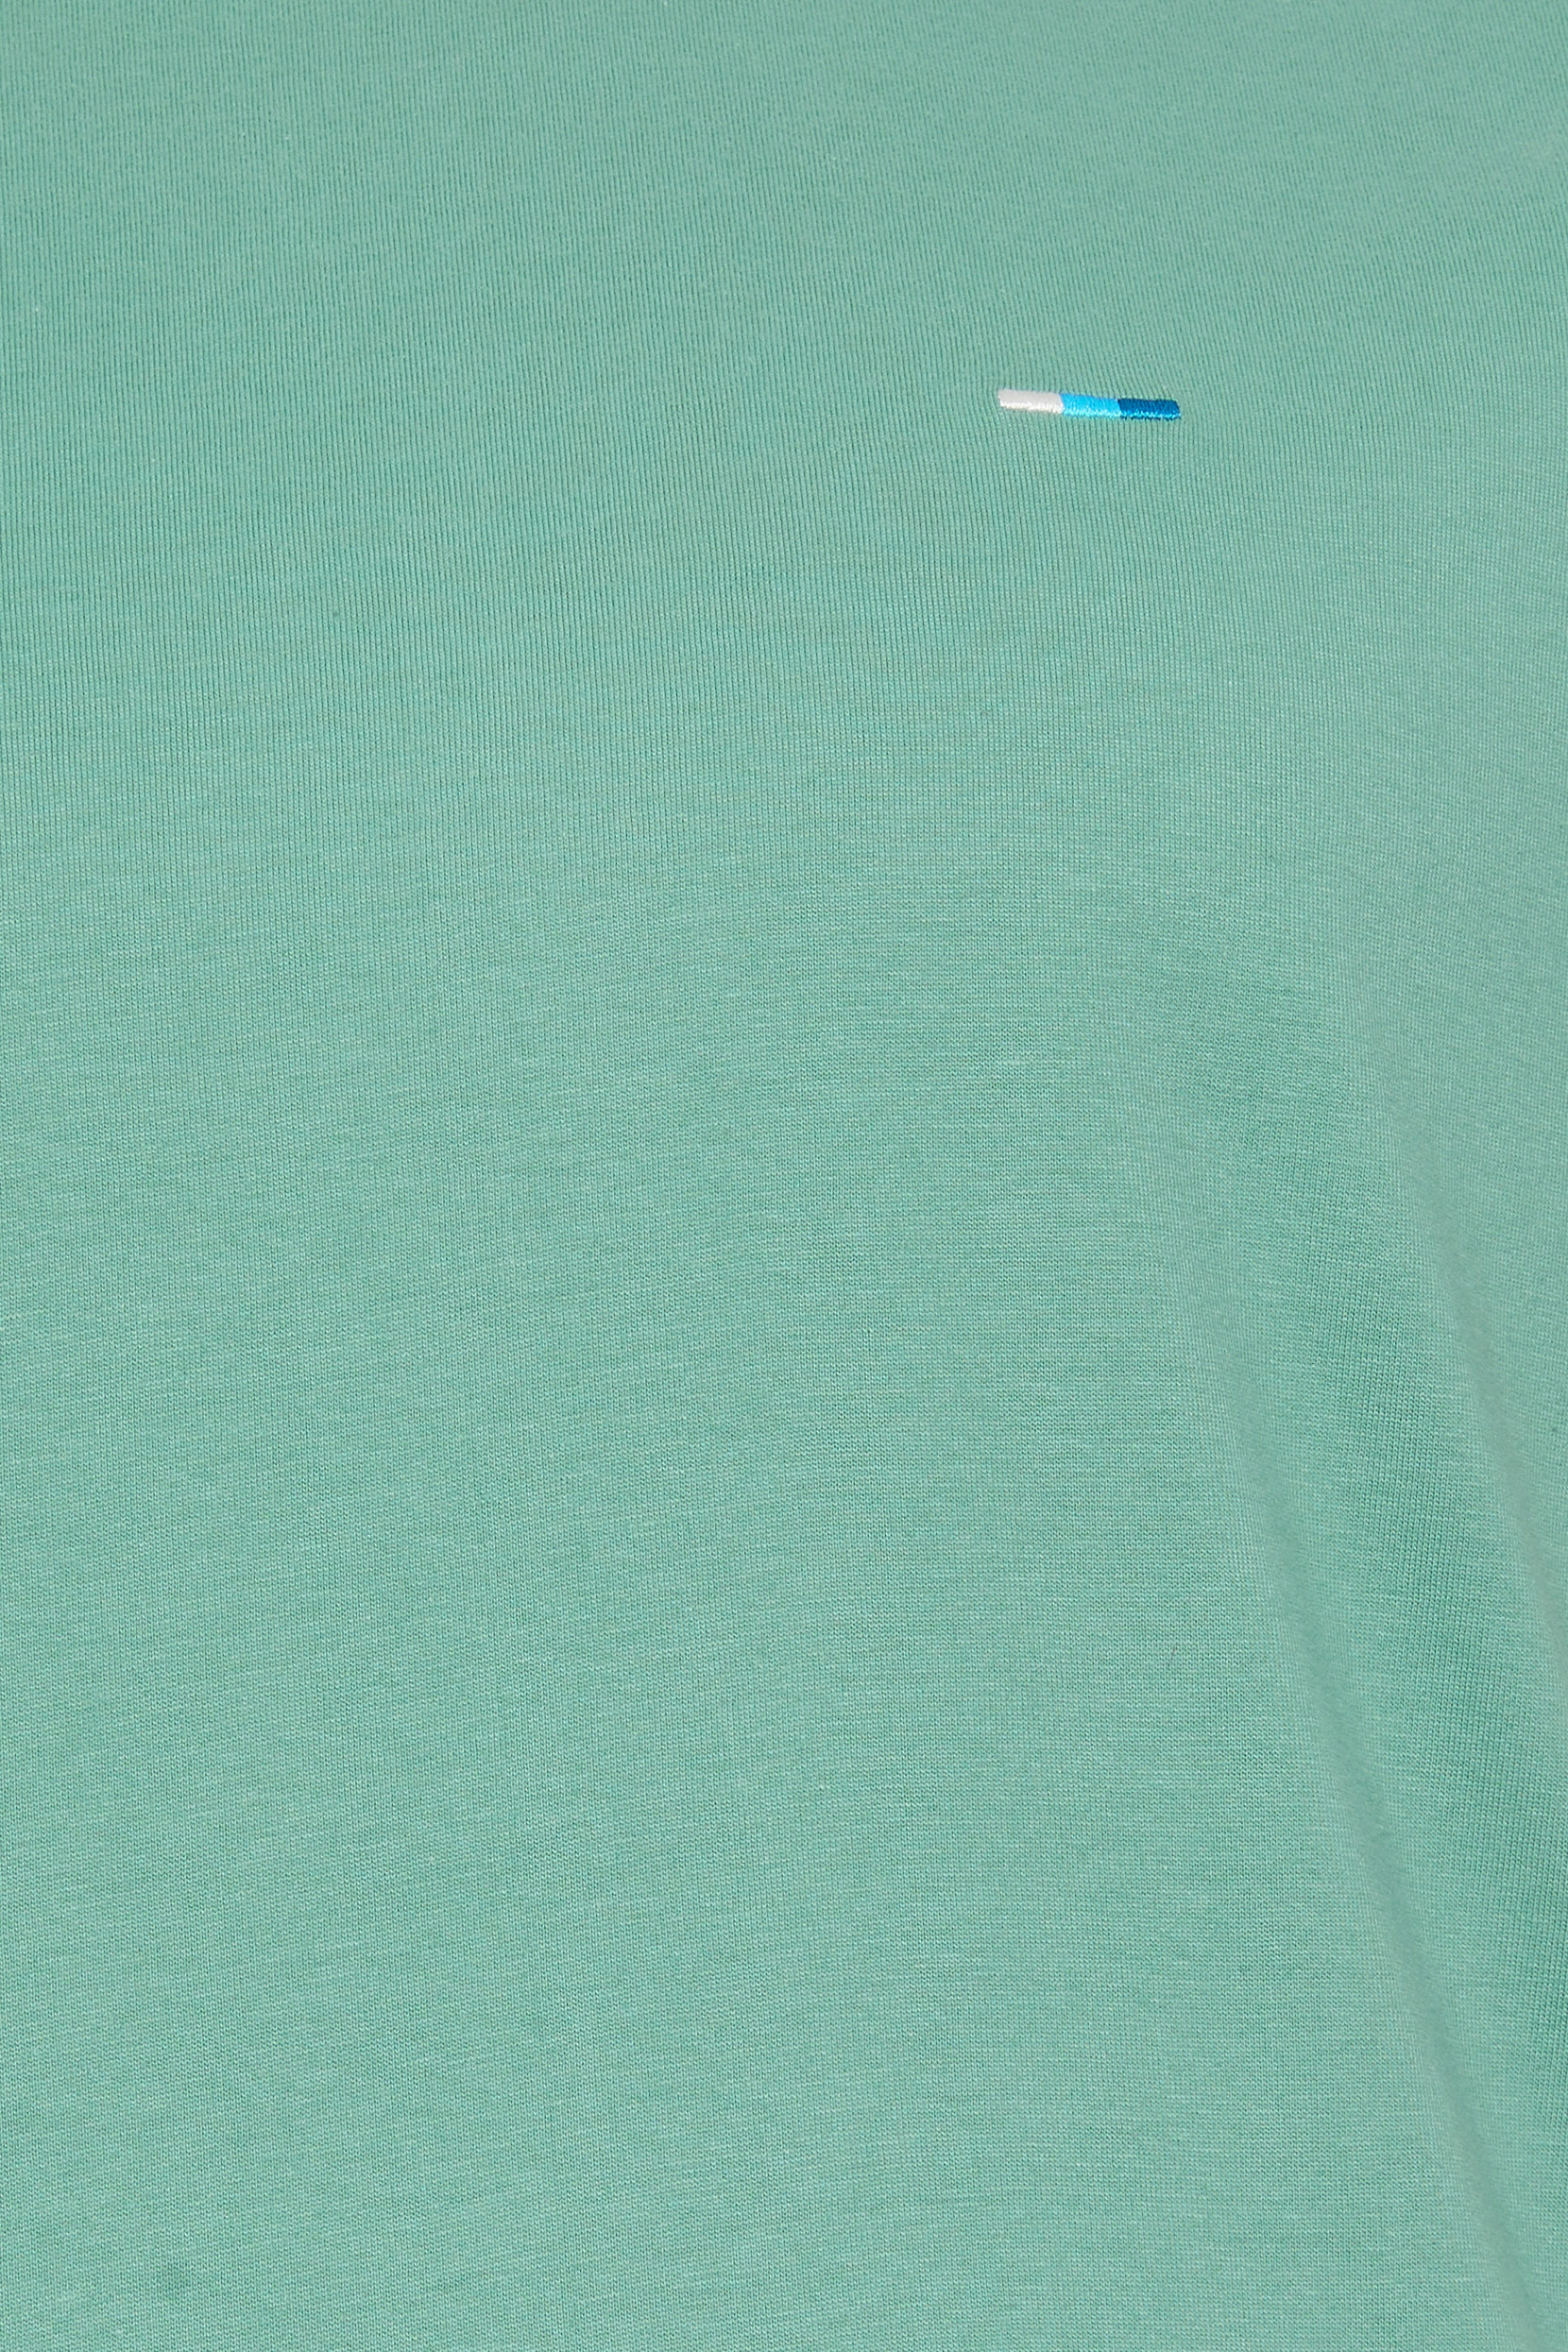 BadRhino Big & Tall Mineral Blue Core T-Shirt | BadRhino 3